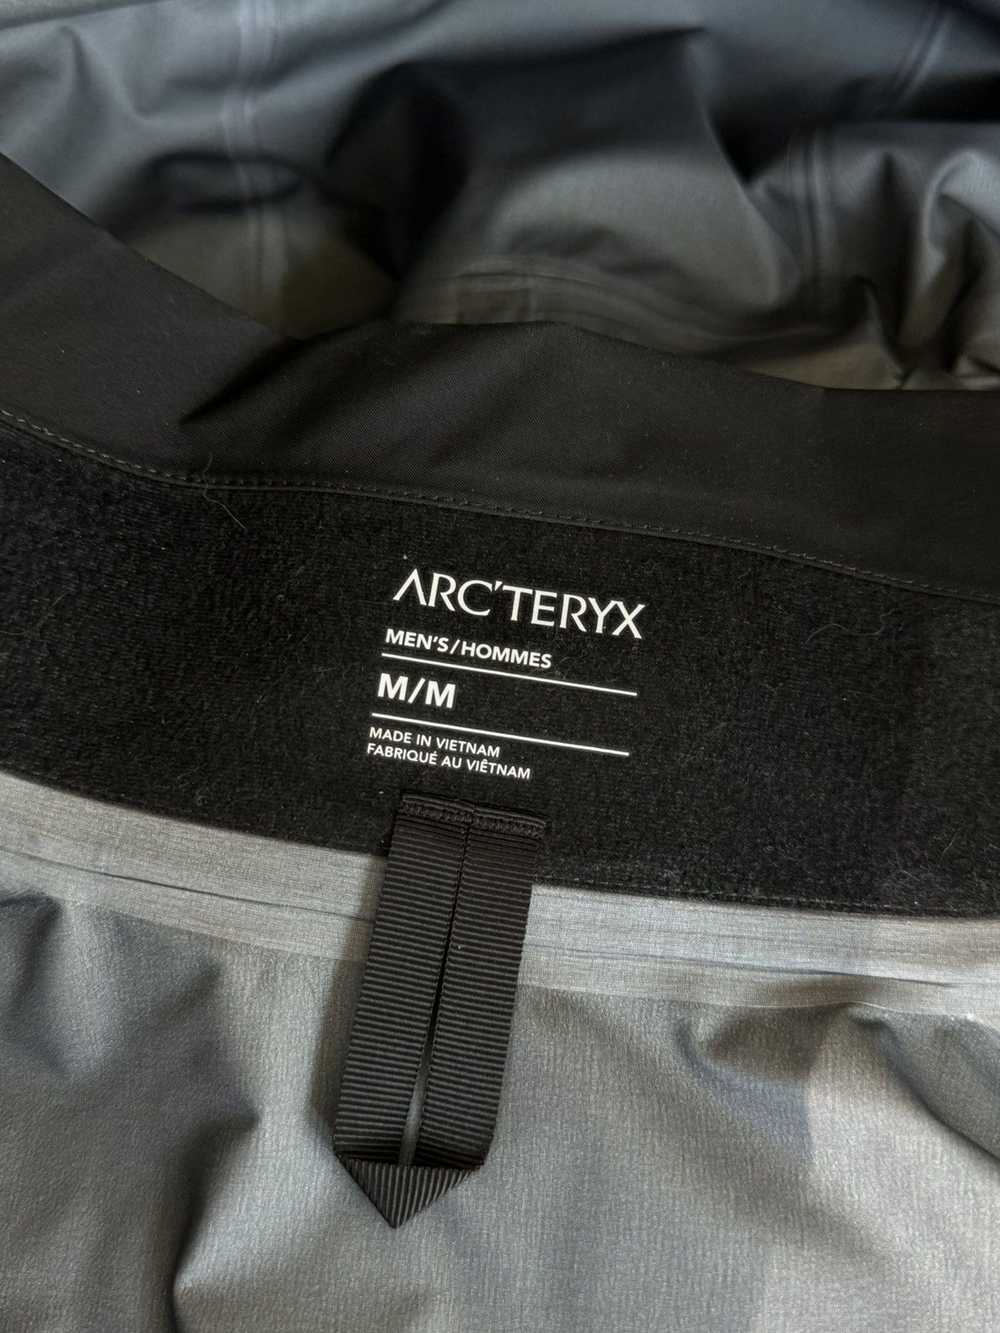 Arc'Teryx Arc’teryx Beta AR Jacket - image 5